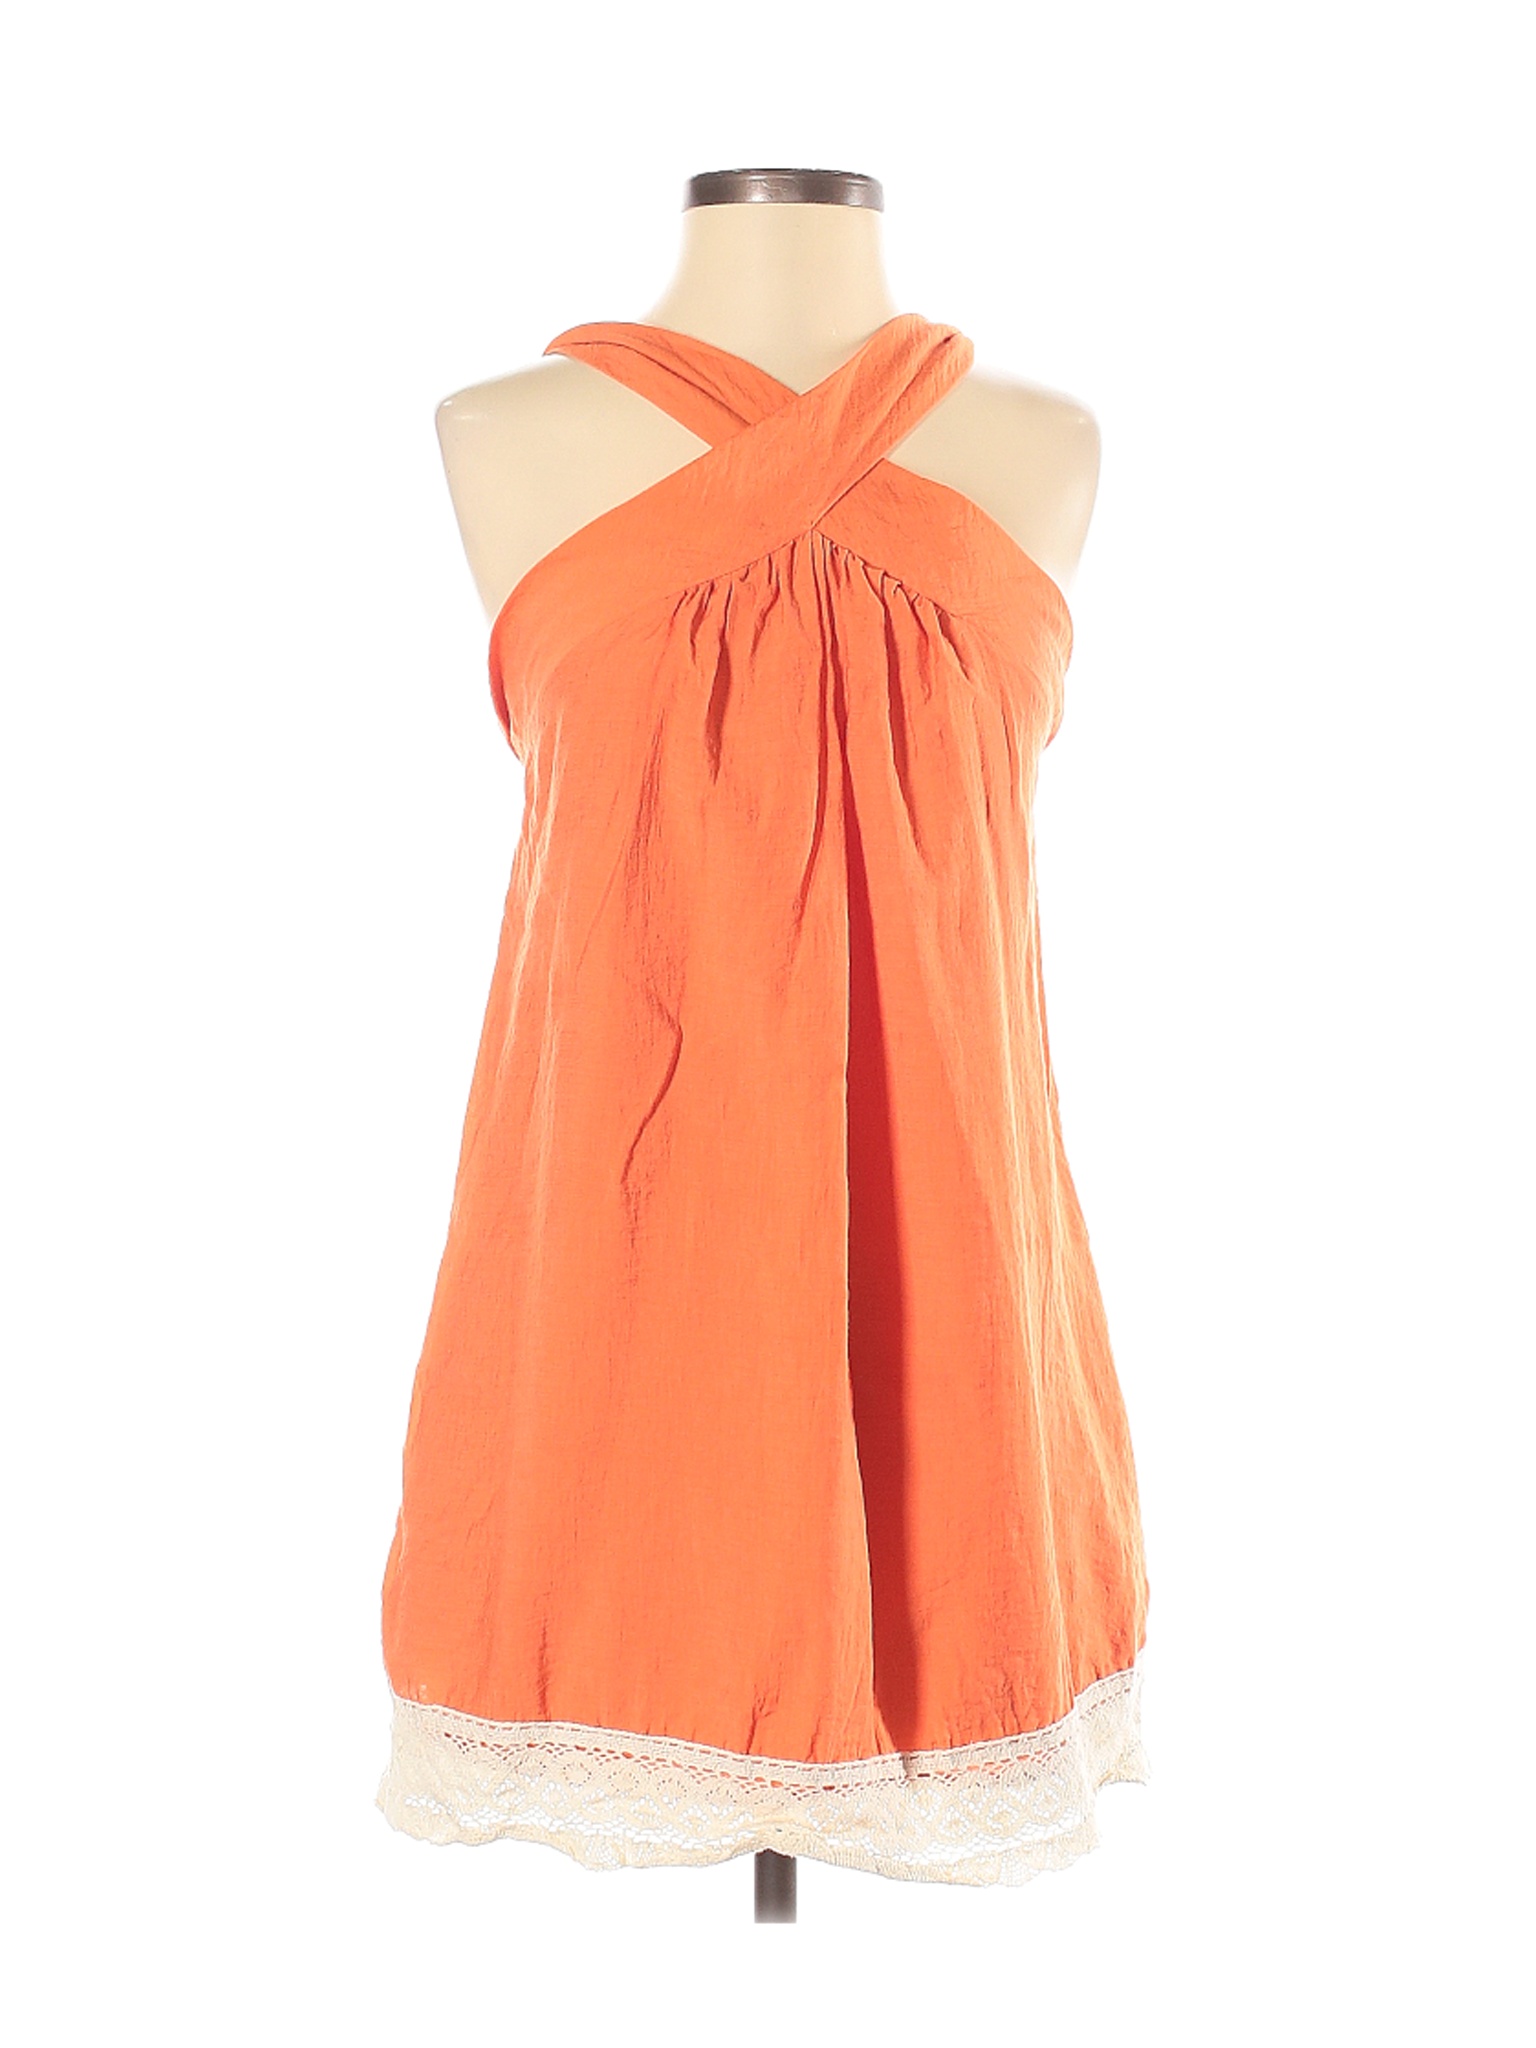 BCBGMAXAZRIA Solid Orange Casual Dress Size XXS - 71% off | thredUP